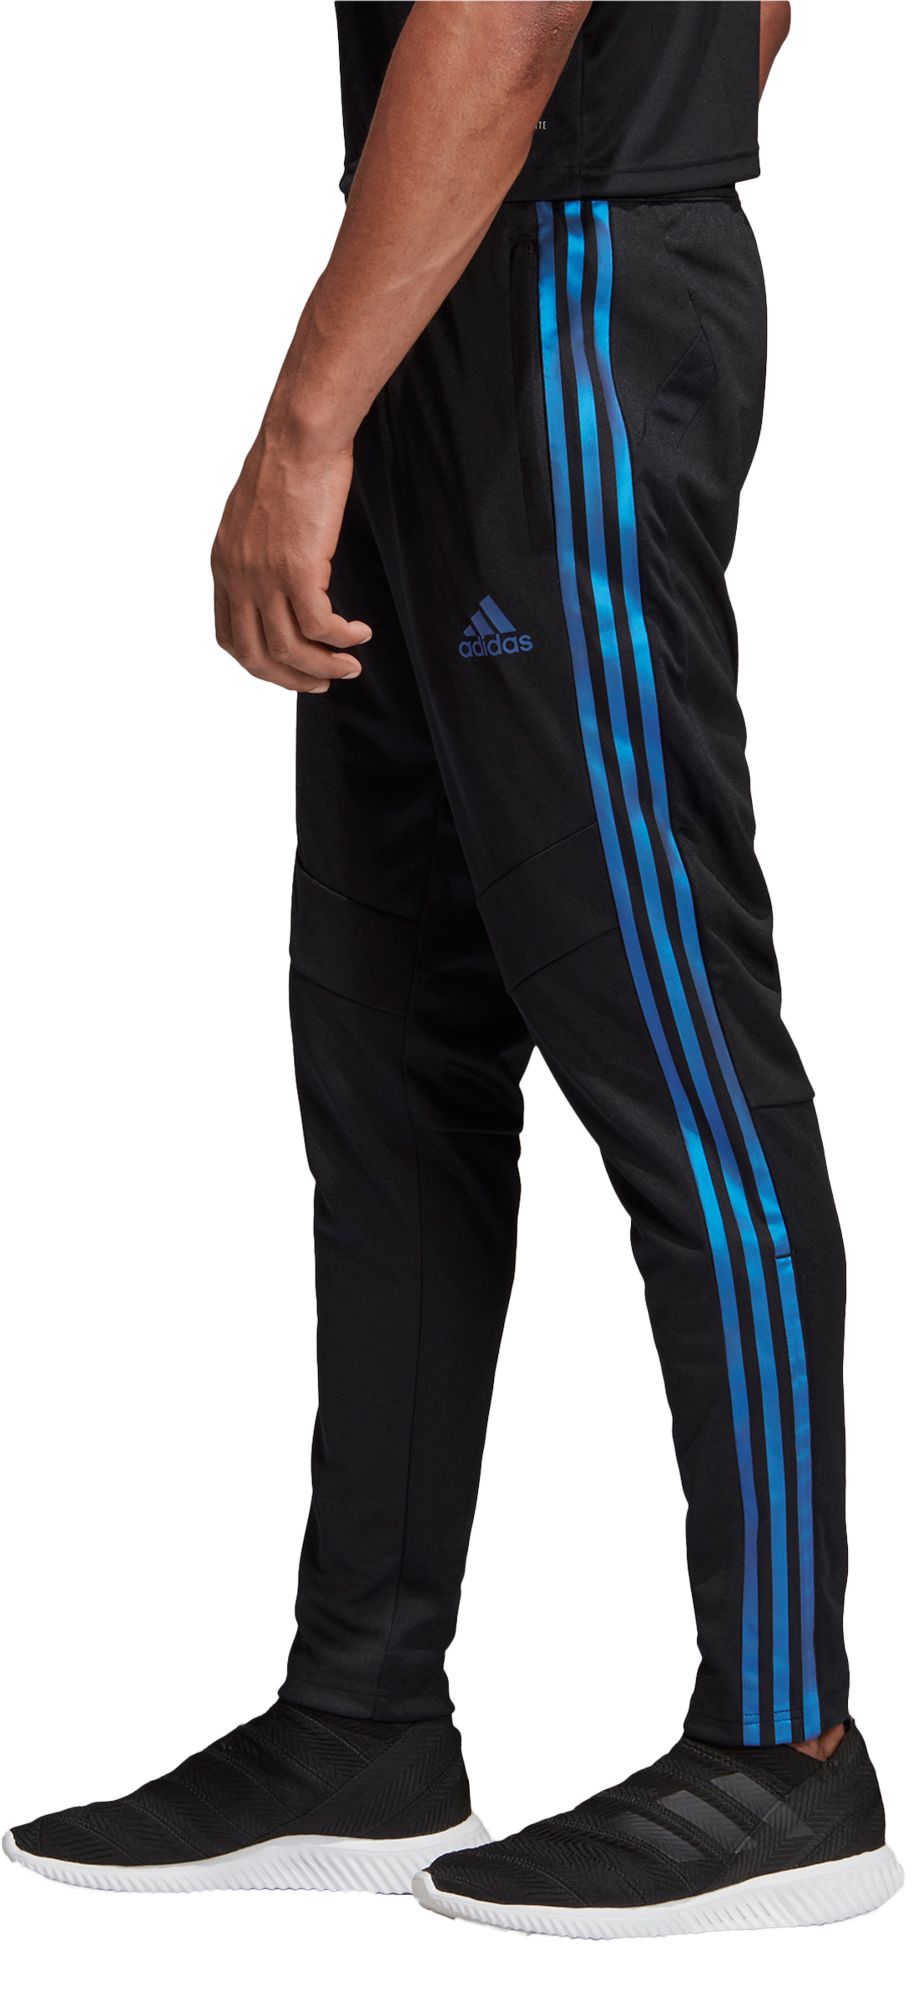 black adidas pants with blue stripes